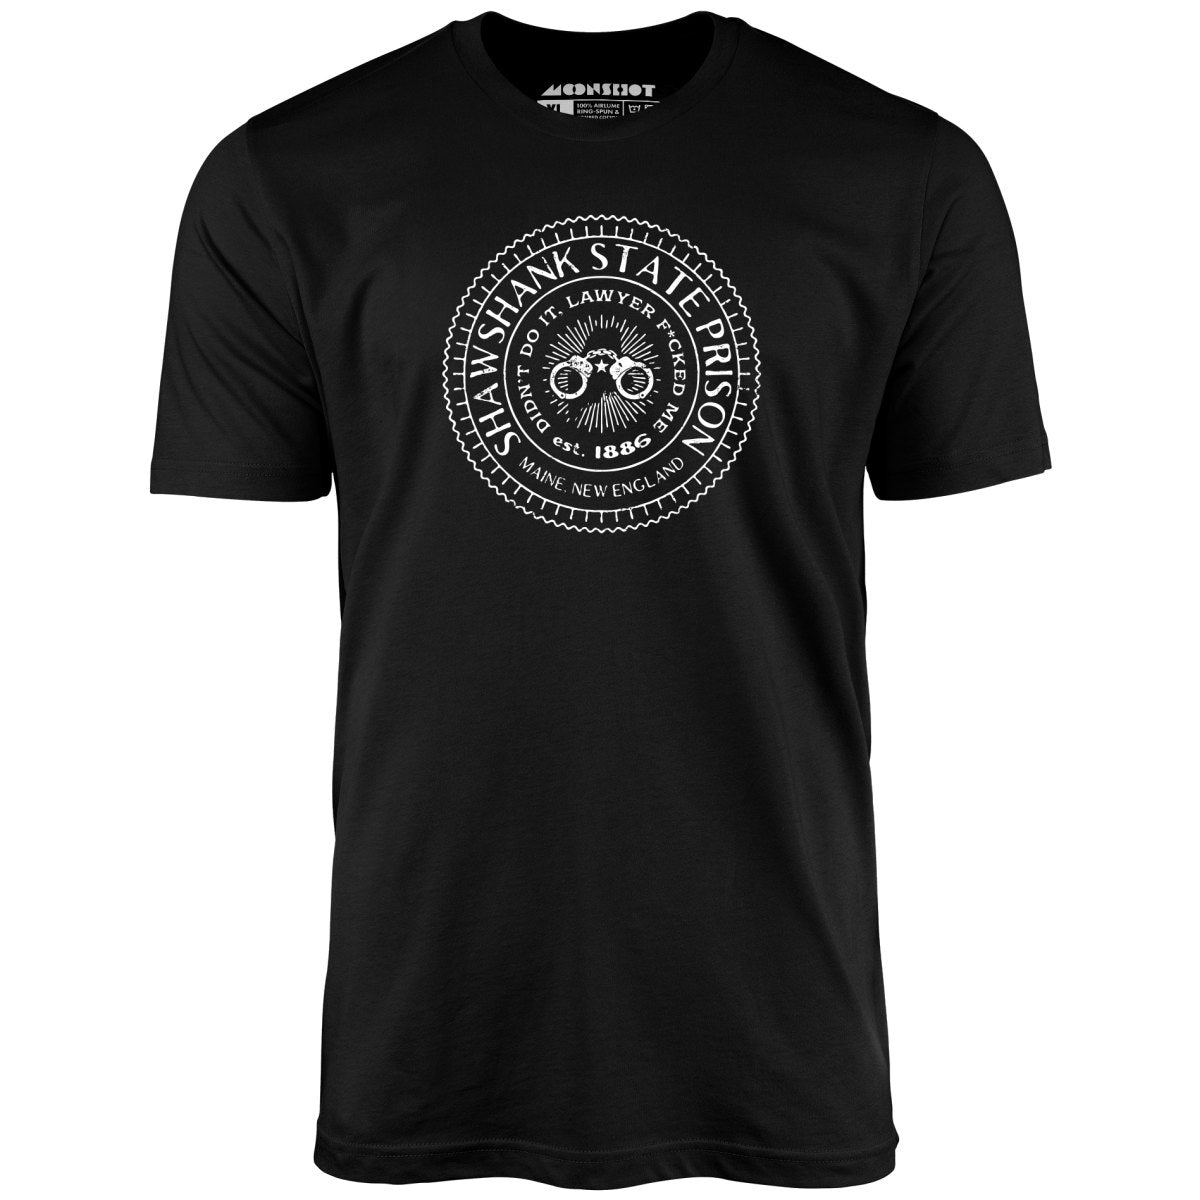 Shawshank State Prison - Unisex T-Shirt